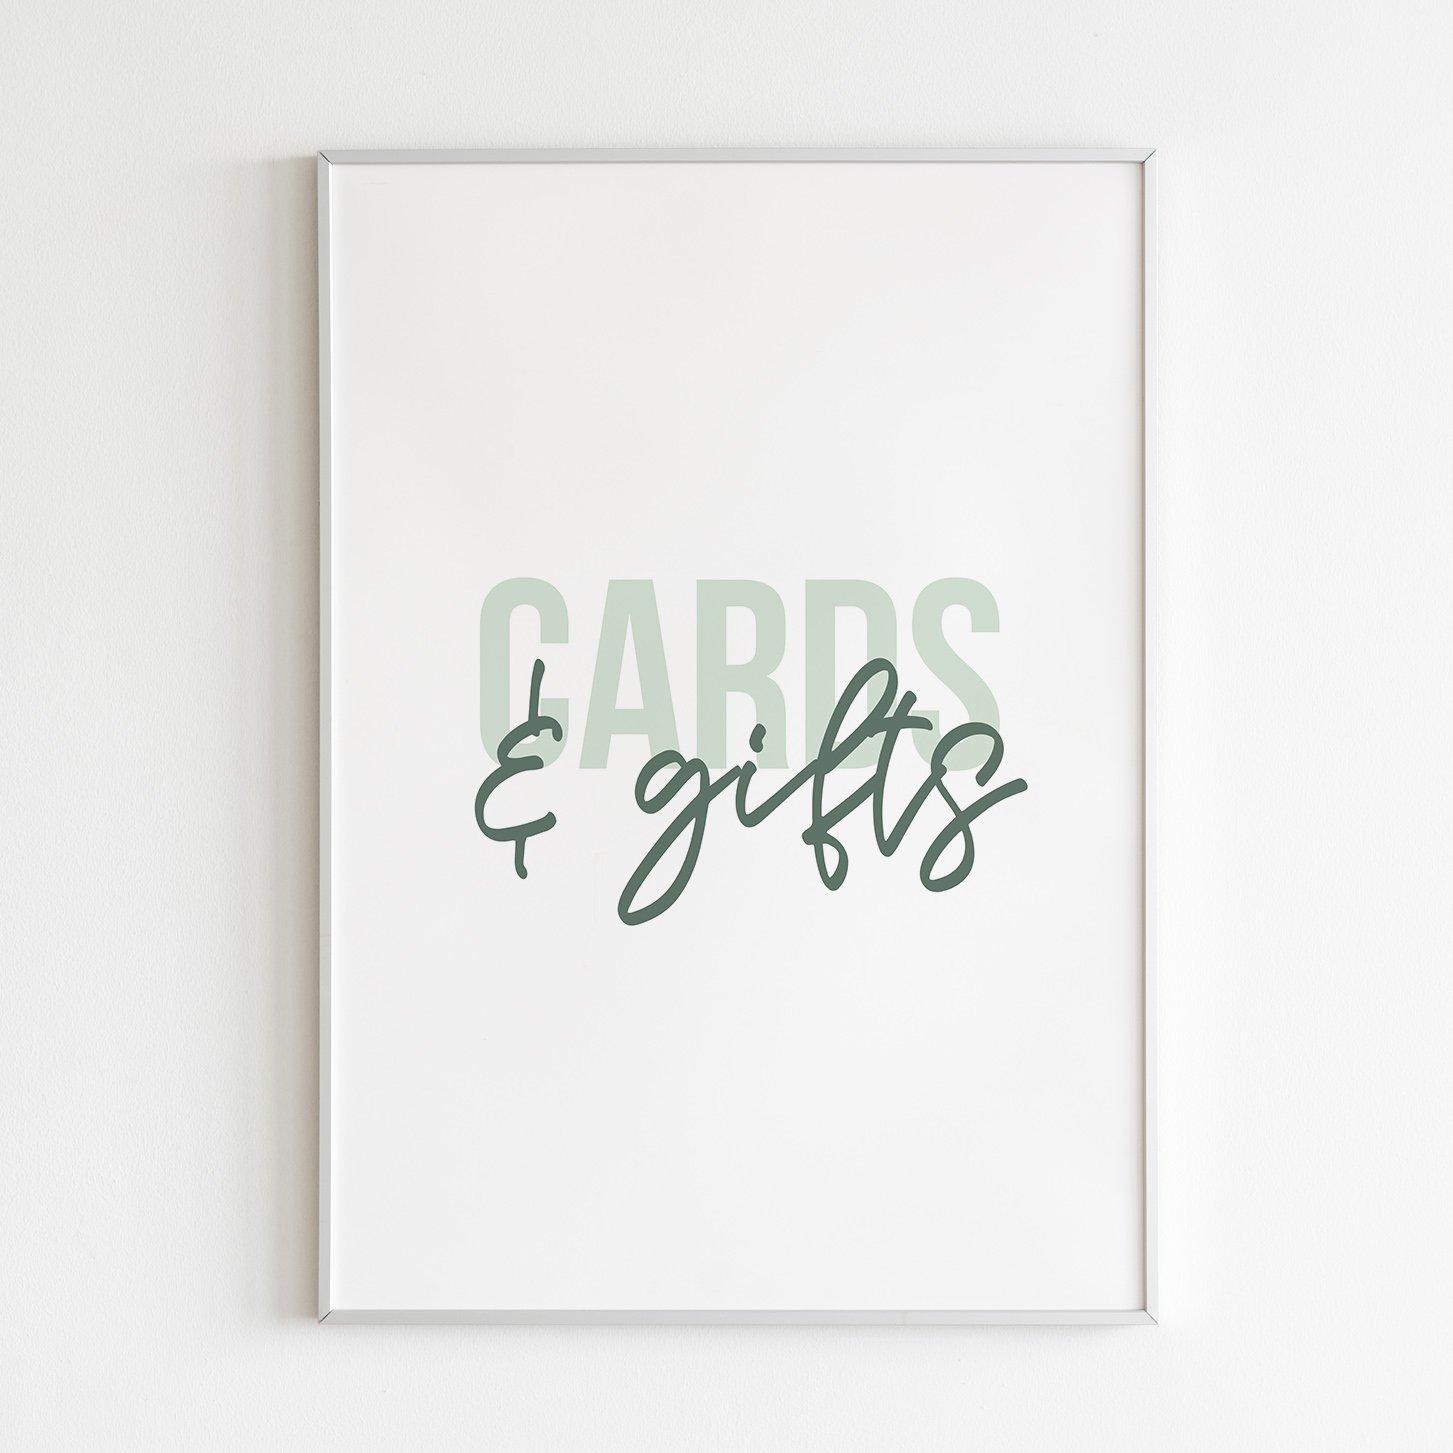 Cards&GiftsGreens_A1w.jpg